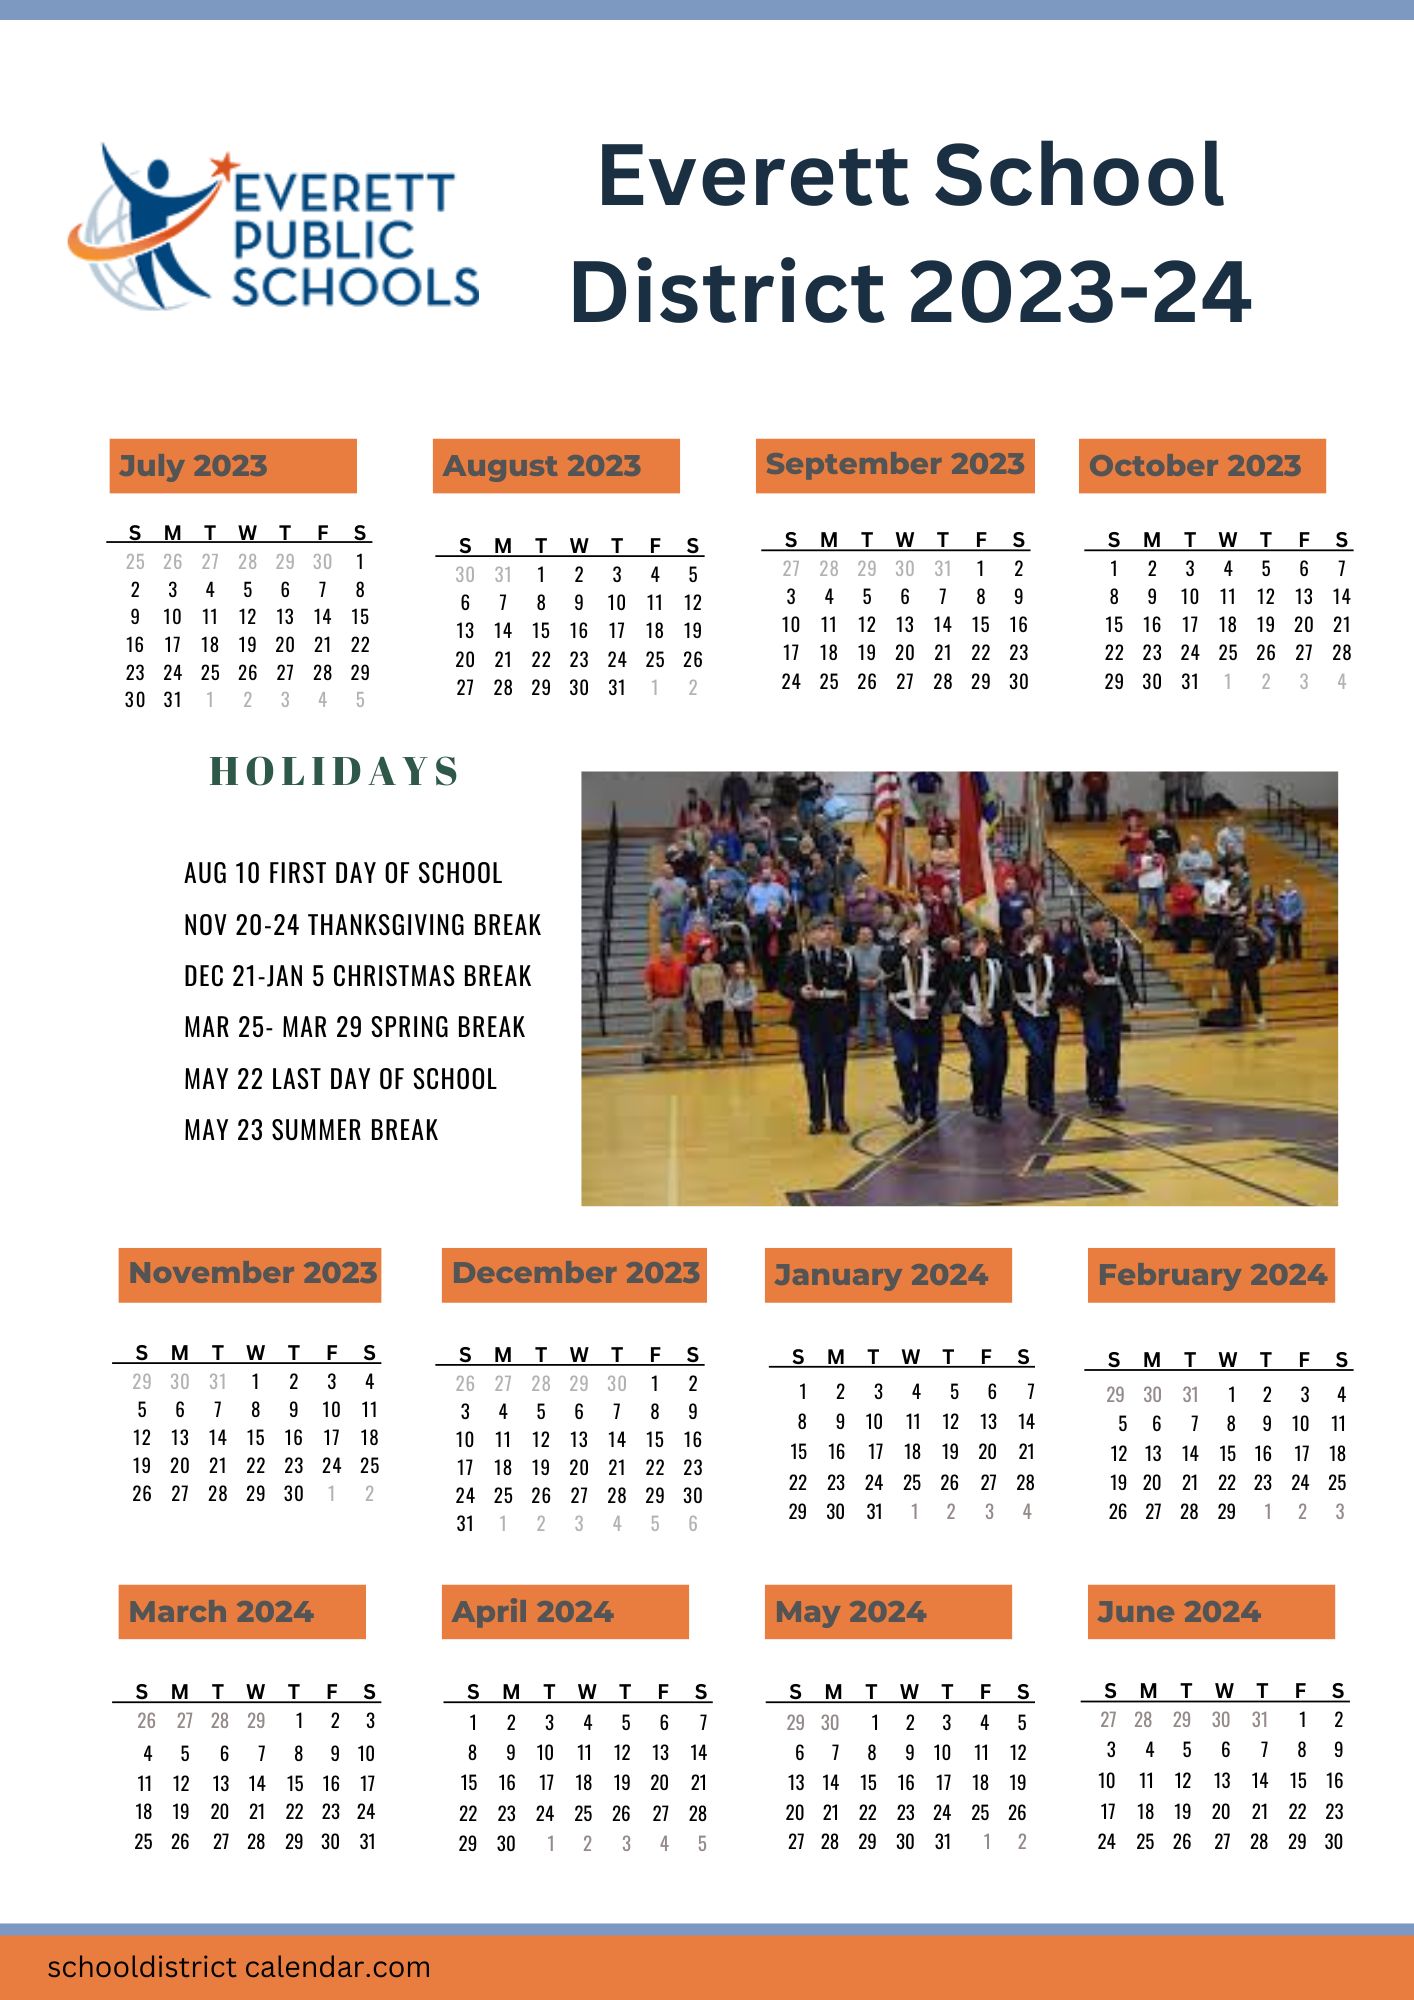 Everett School District Calendar Holidays 20232024